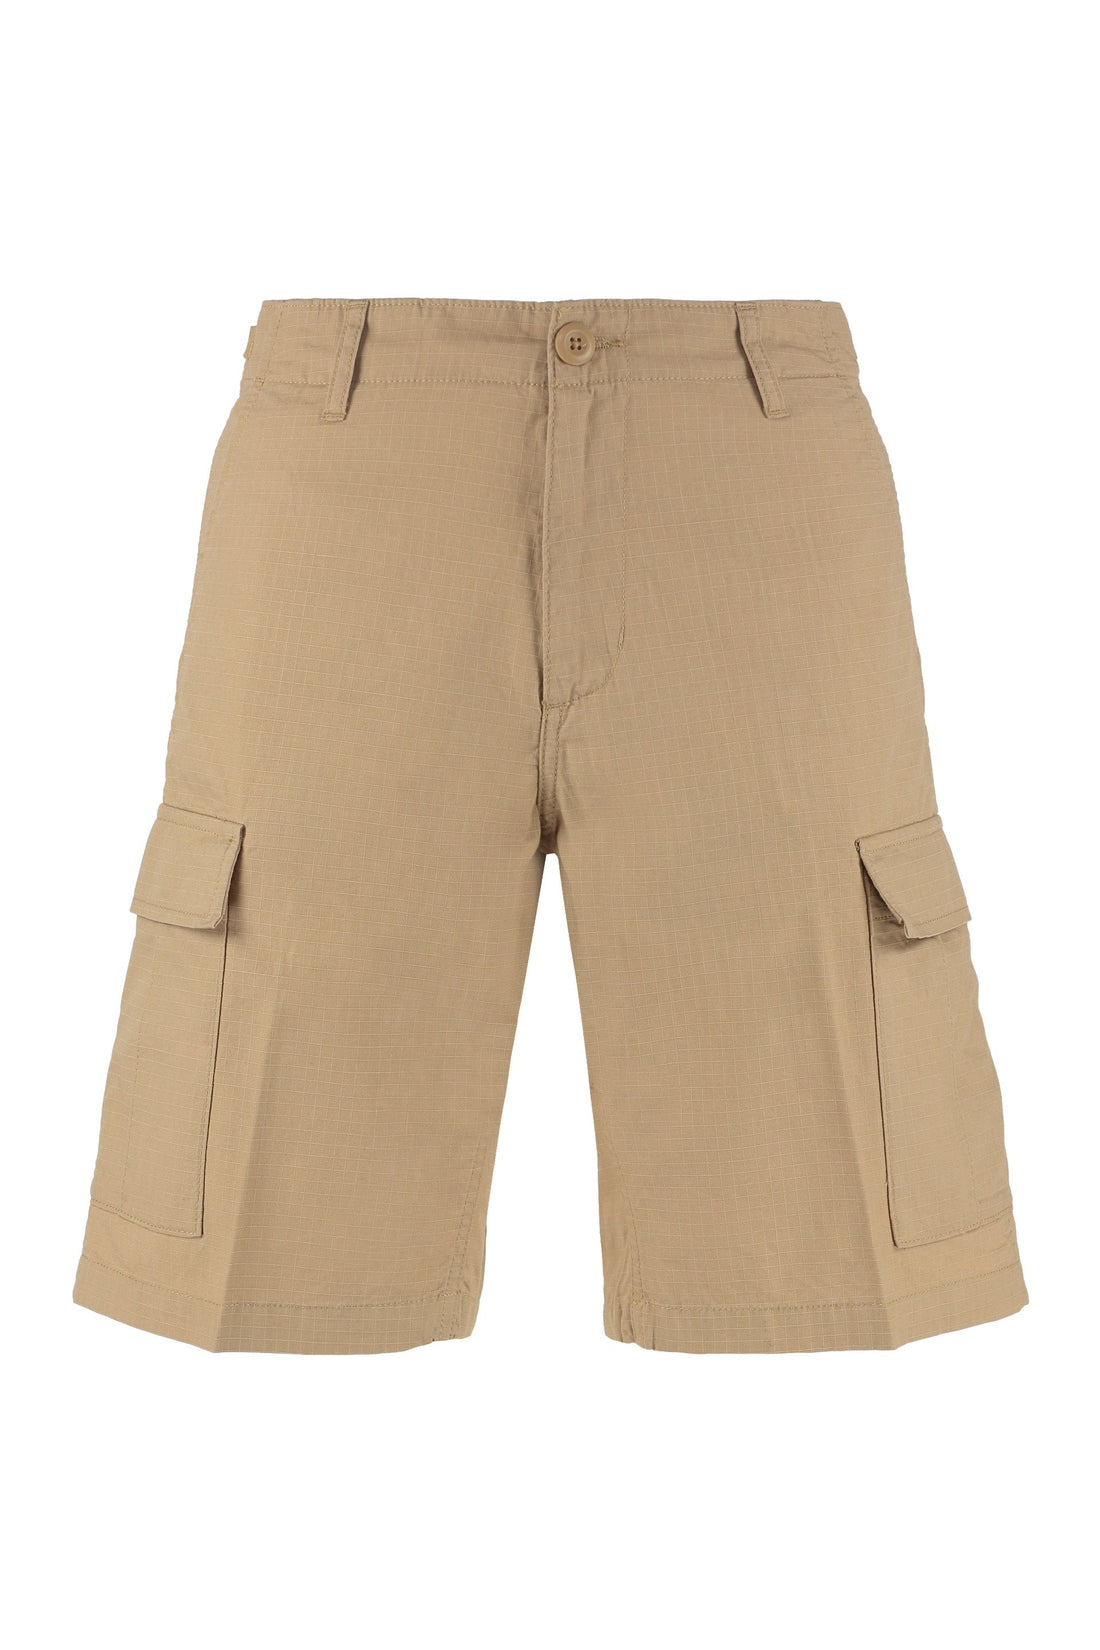 Carhartt-OUTLET-SALE-Aviation cotton bermuda shorts-ARCHIVIST